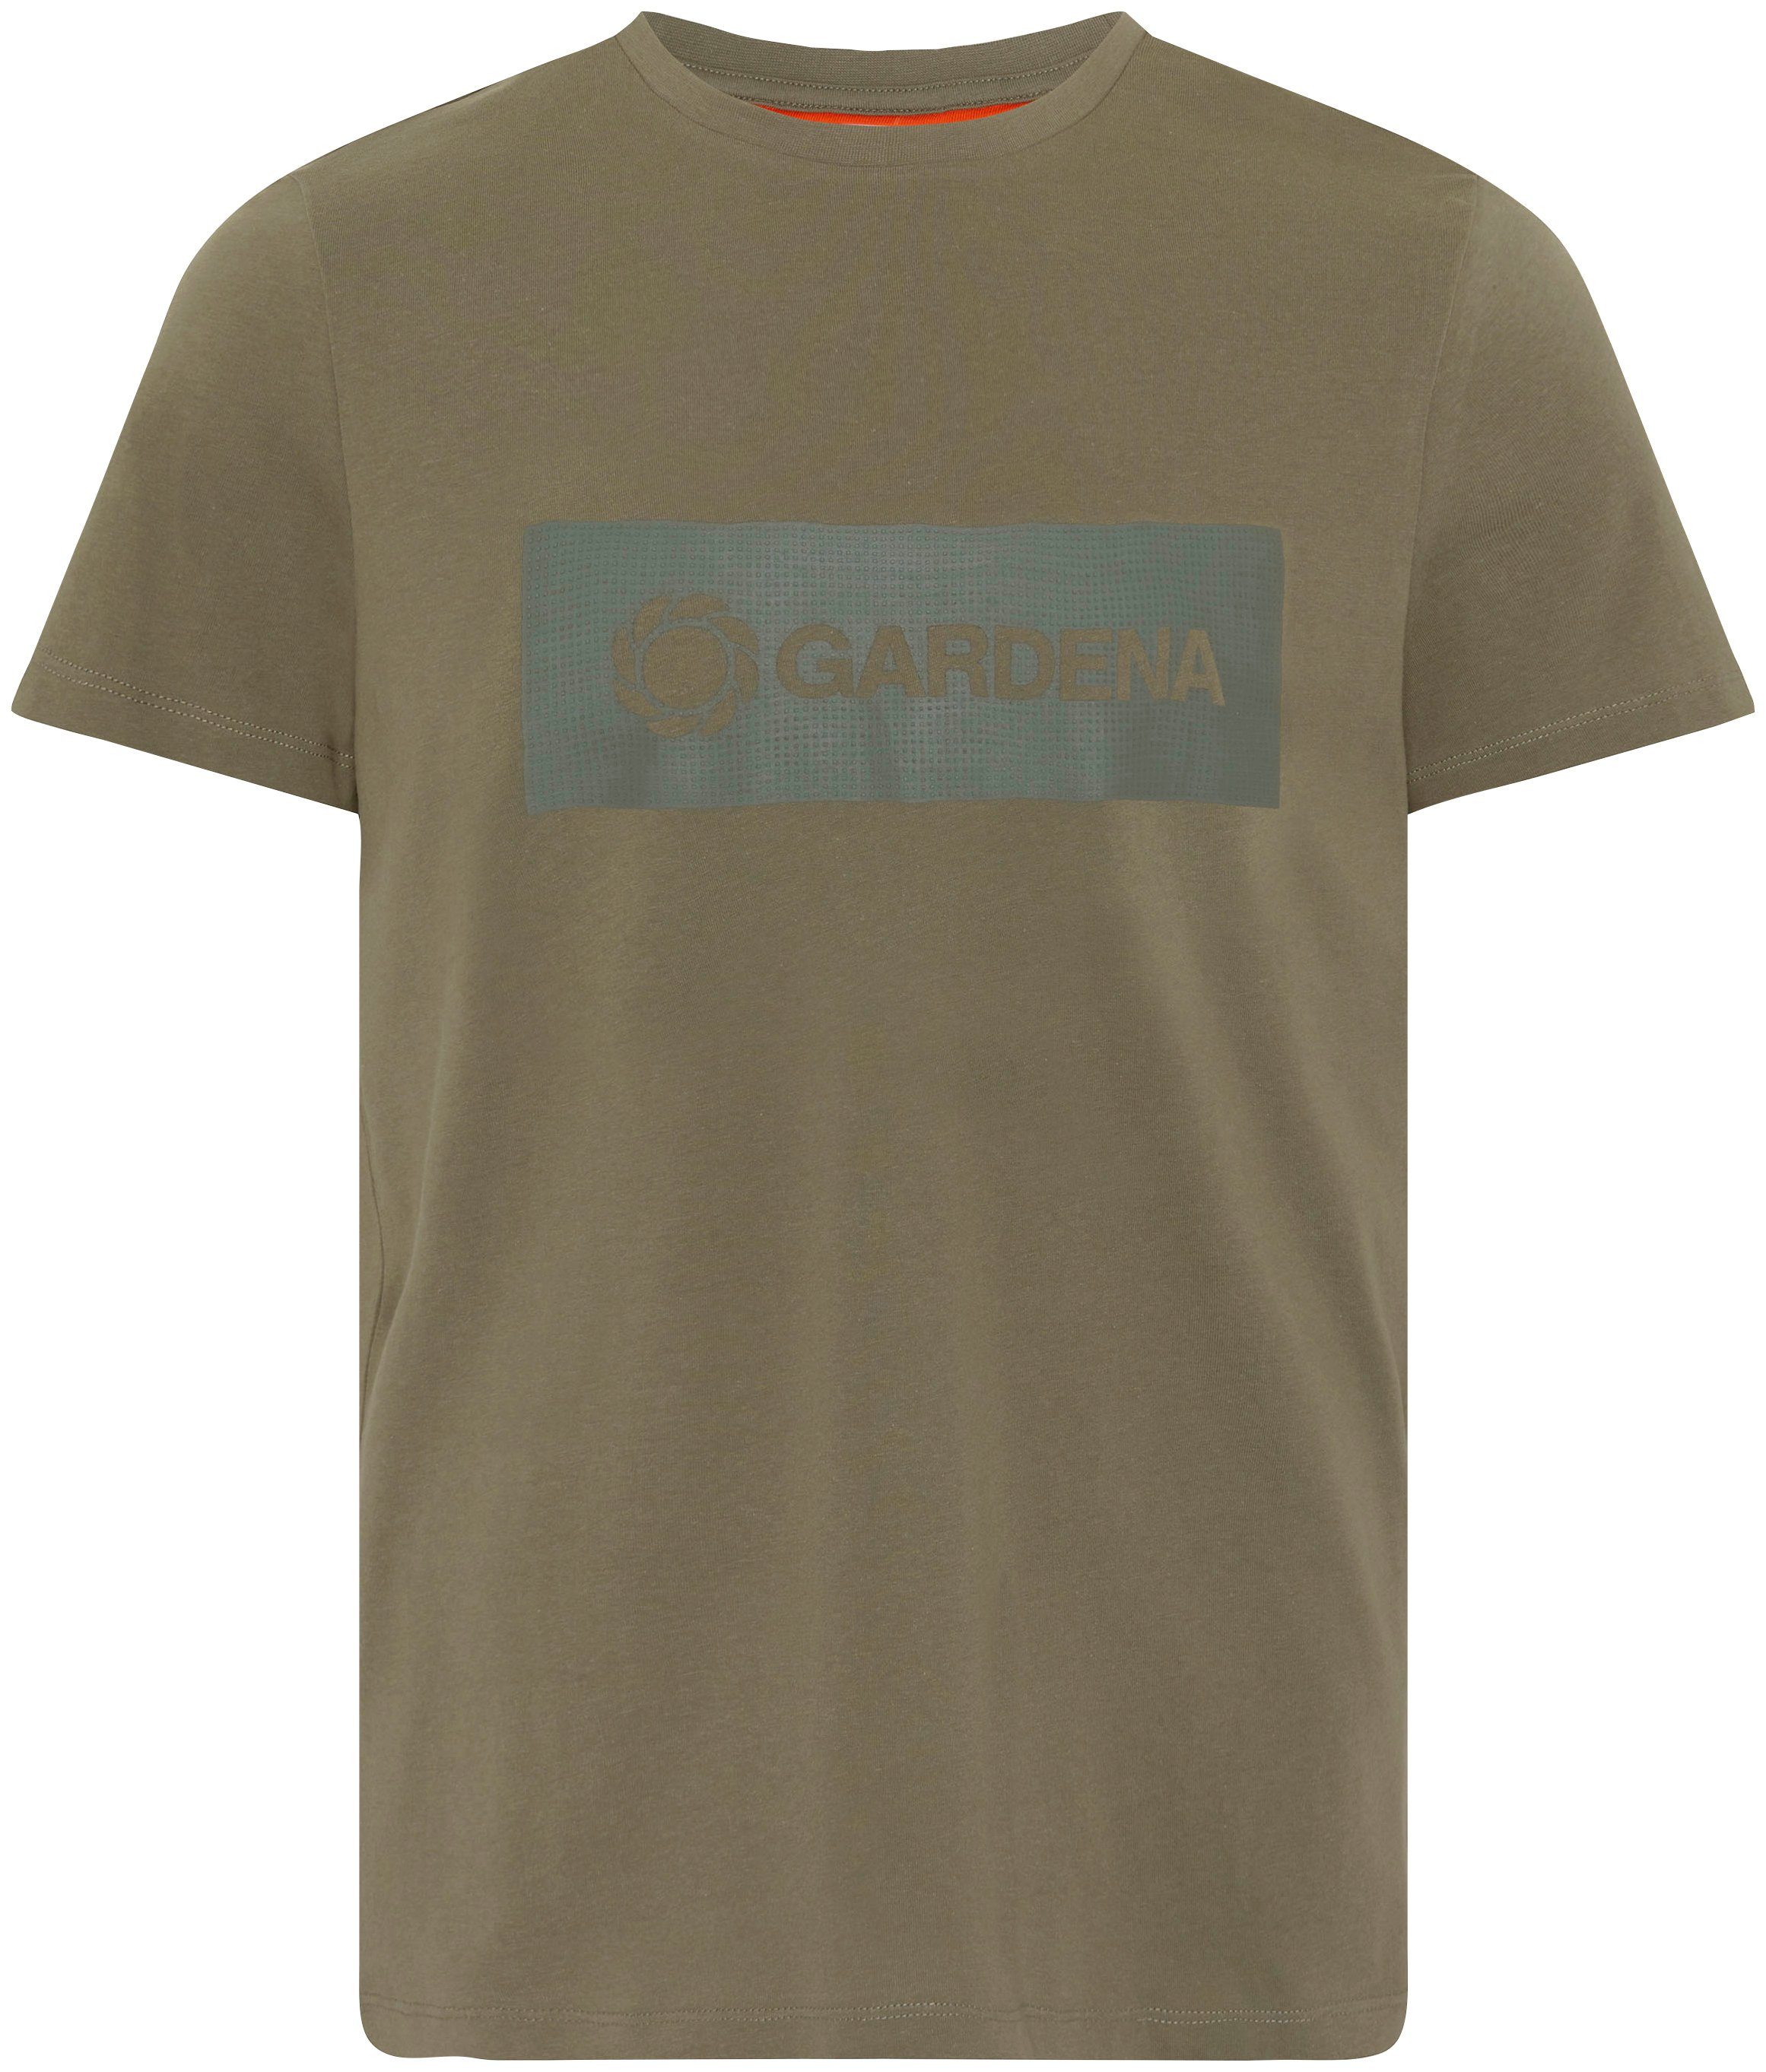 GARDENA T-Shirt Dusty Olive mit Gardena-Logodruck